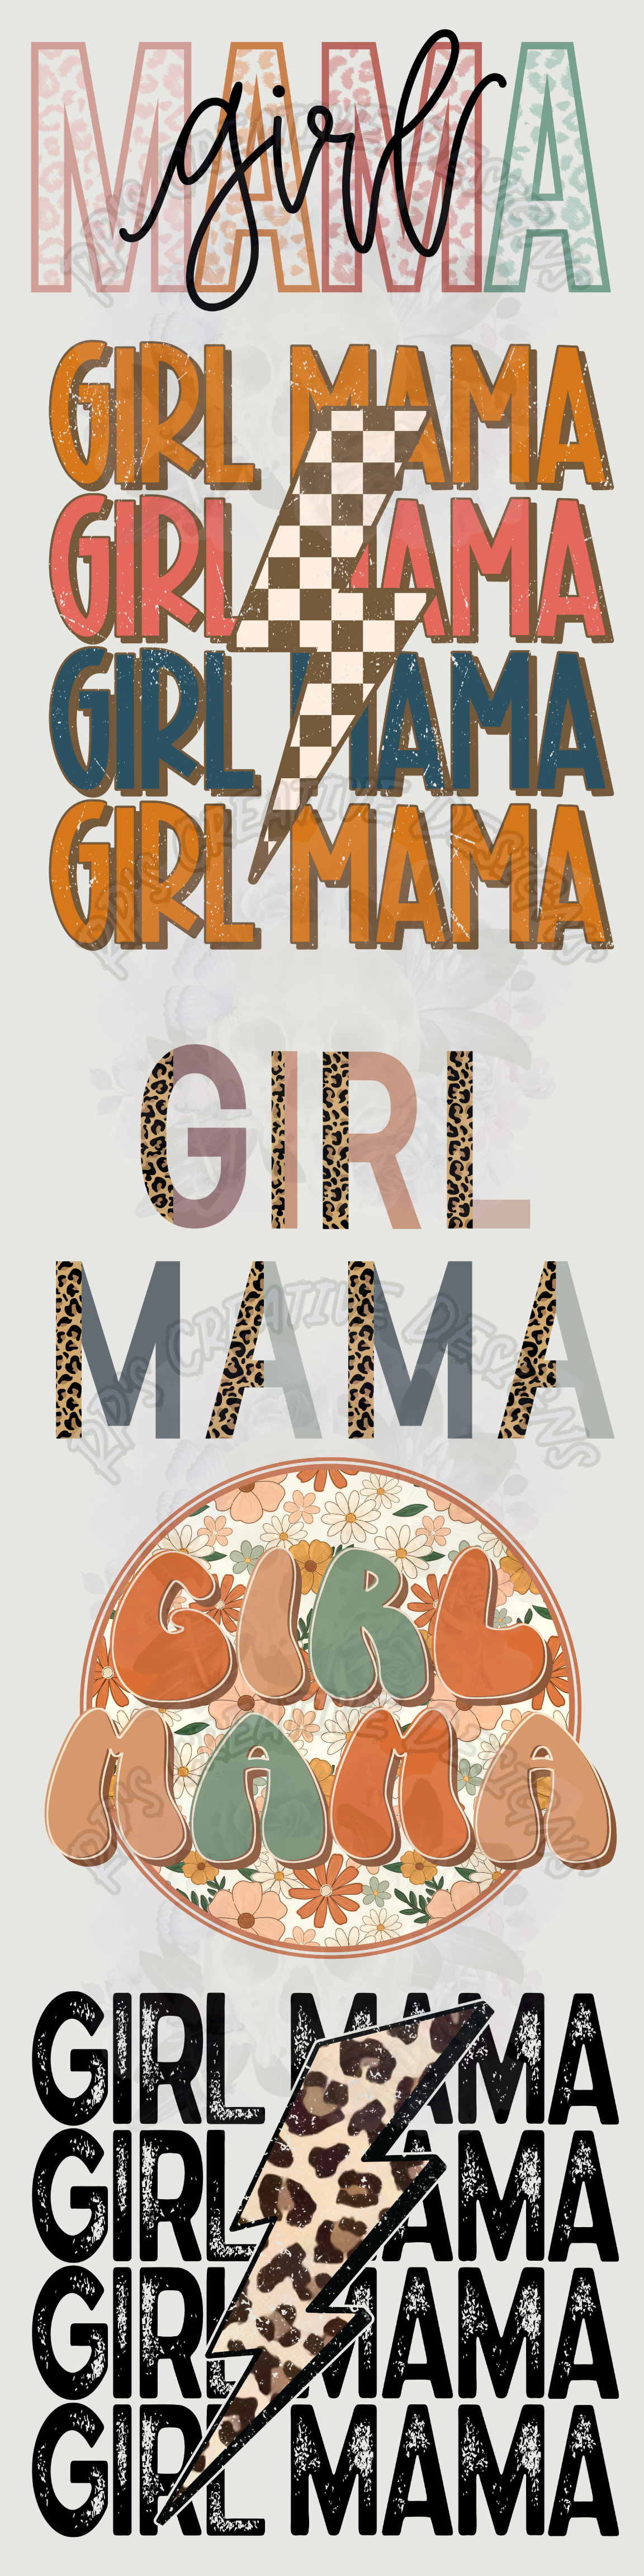 Girl Mama Gang Sheet